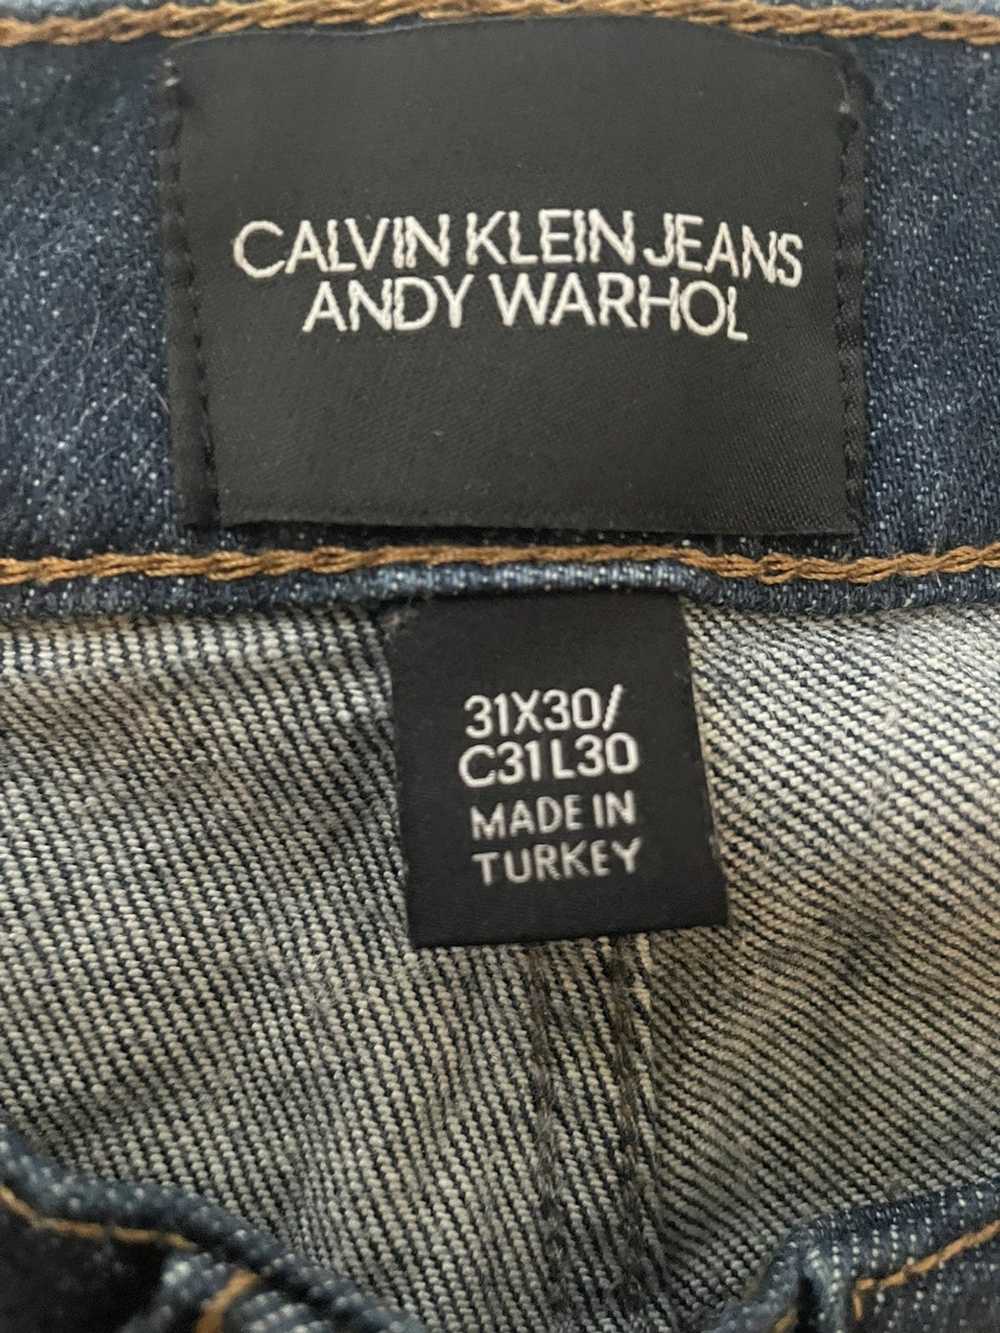 Andy Warhol × Calvin Klein Andy Warhol Denim jeans - image 2